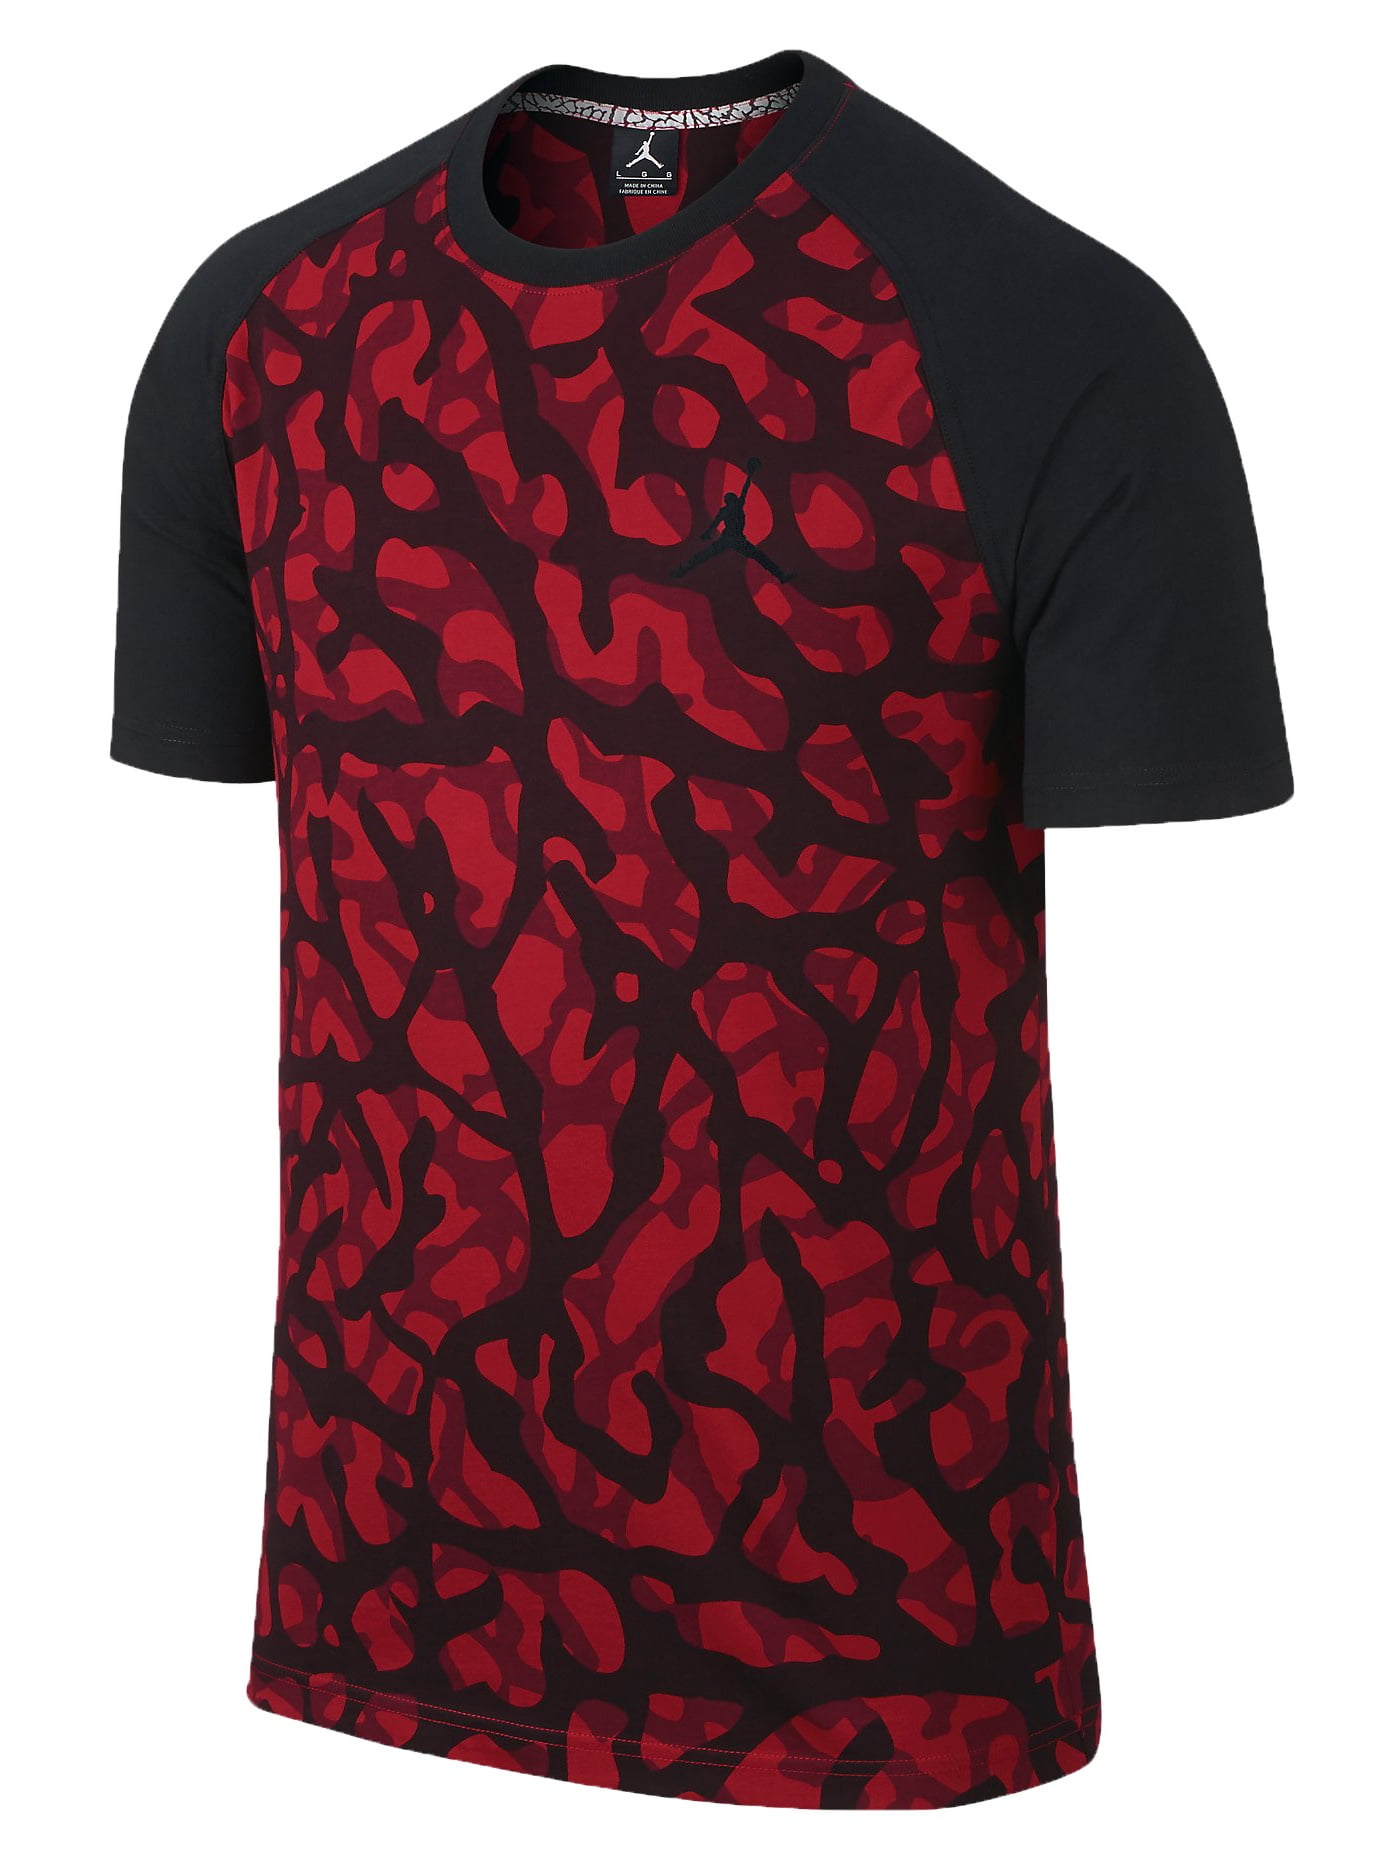 Shuraba beest Smeren Jordan Men's Nike Camo Ele Printed Shirt-Red - Walmart.com